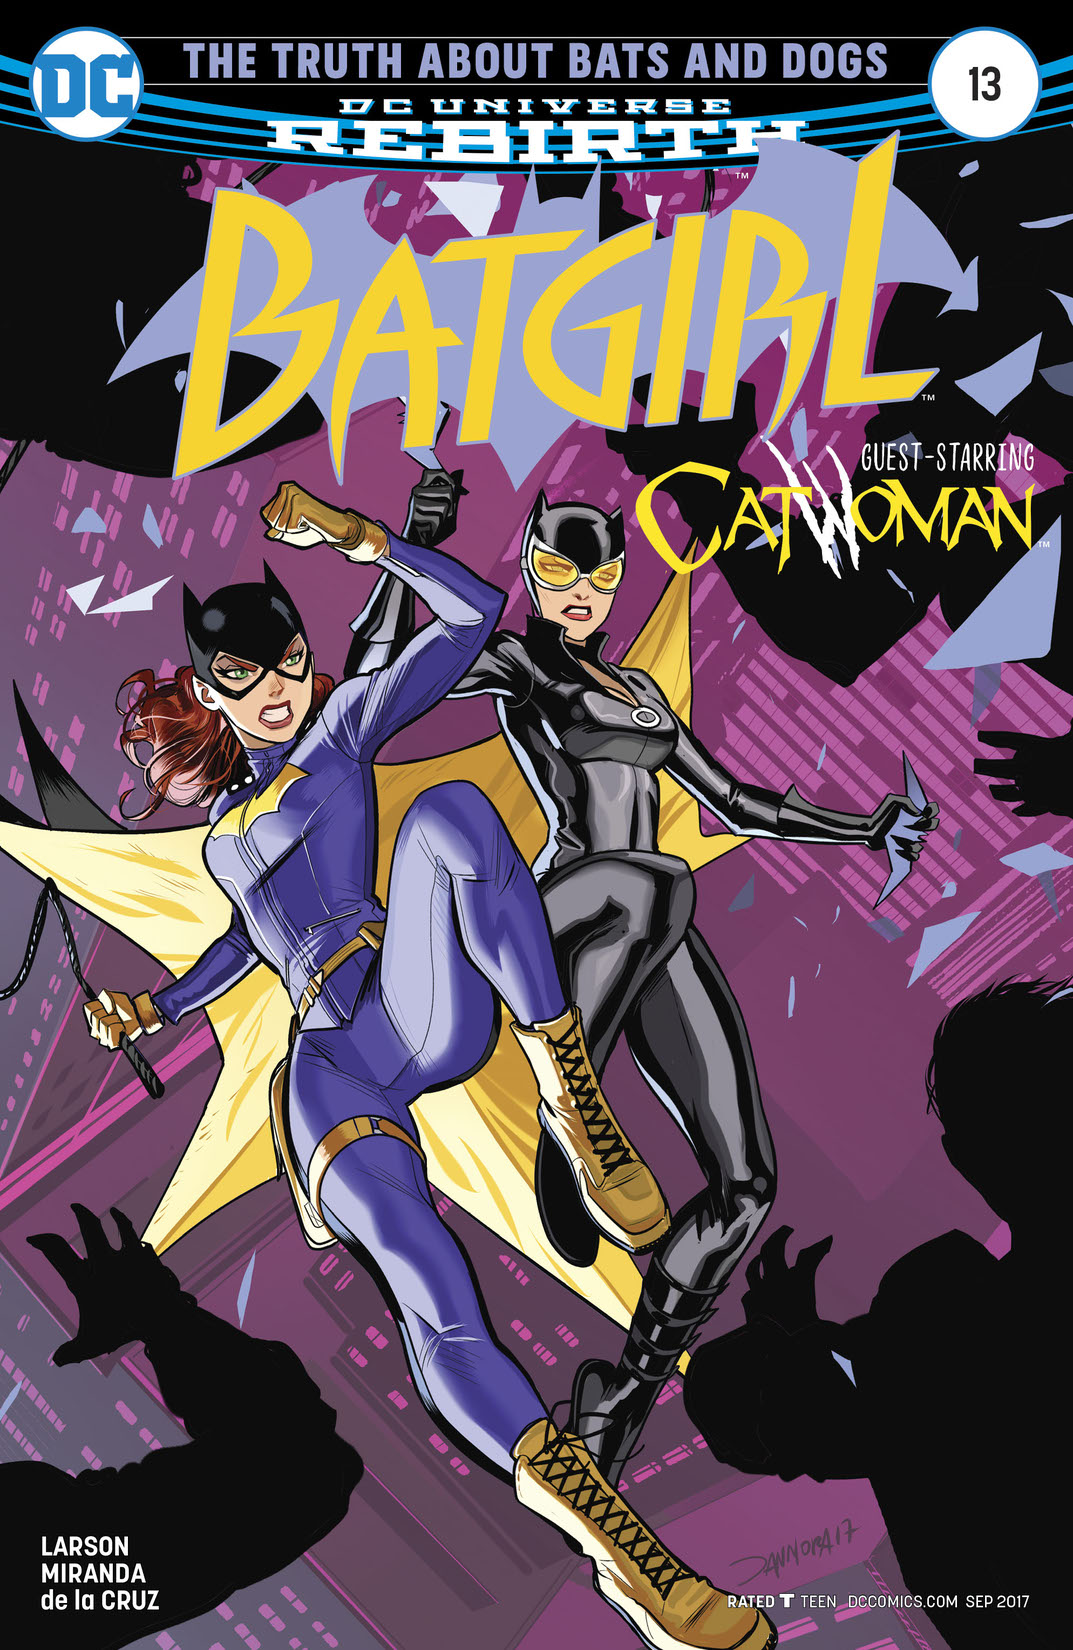 Batgirl (2016-) #13 preview images